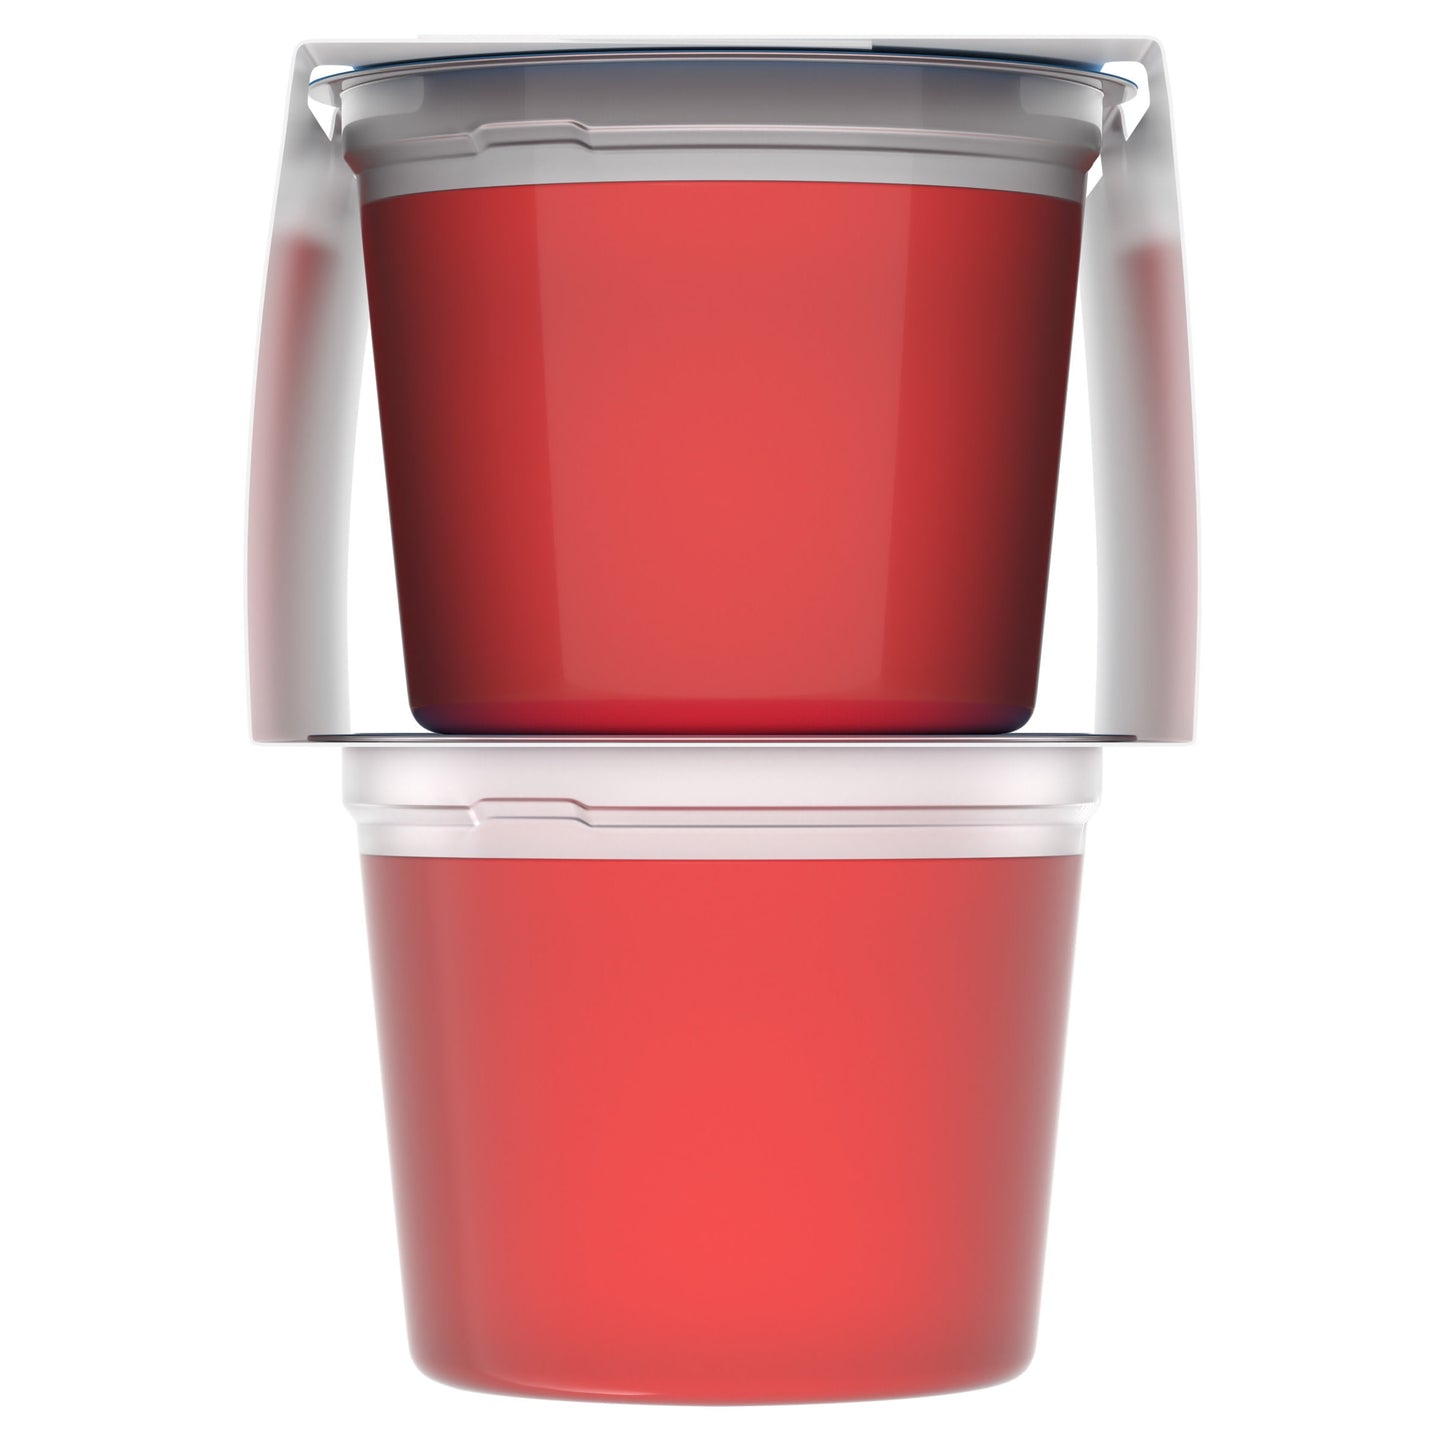 Jell-O Original Strawberry Jello Cups Gelatin Snack, 4 Ct Cups